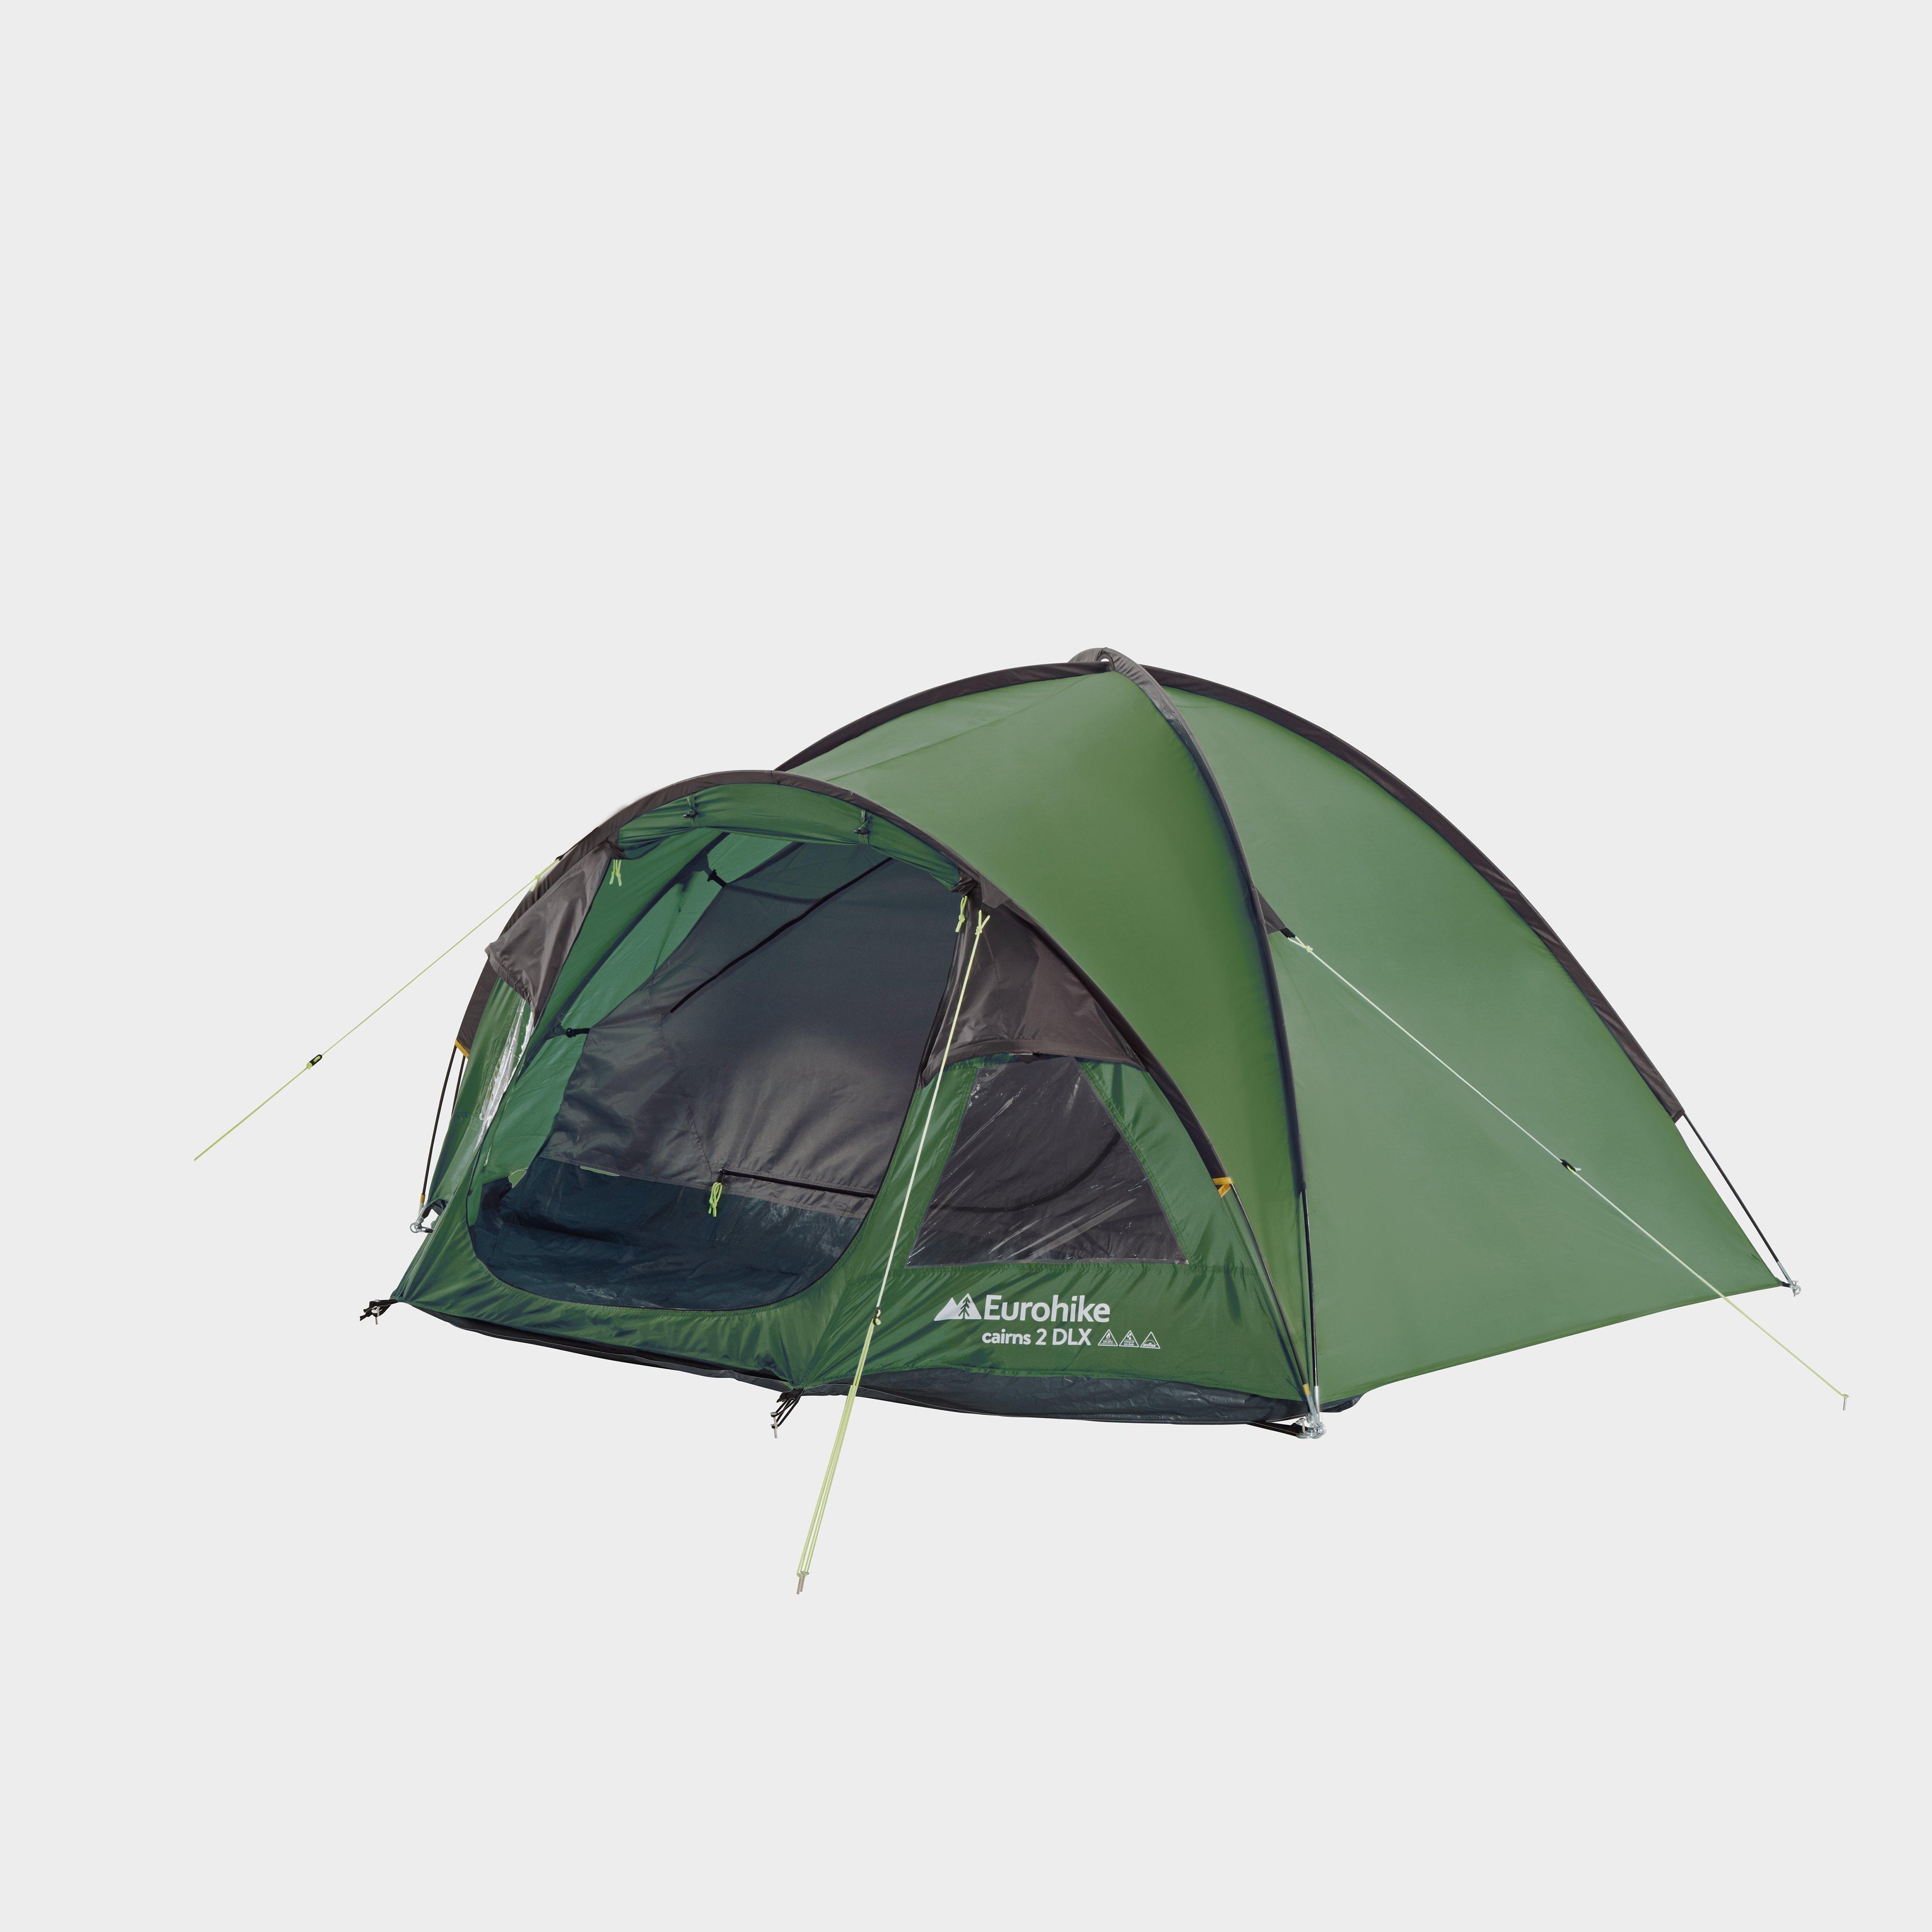 New Eurohike Backpacker Deluxe Festival Tent Camping Gear Green